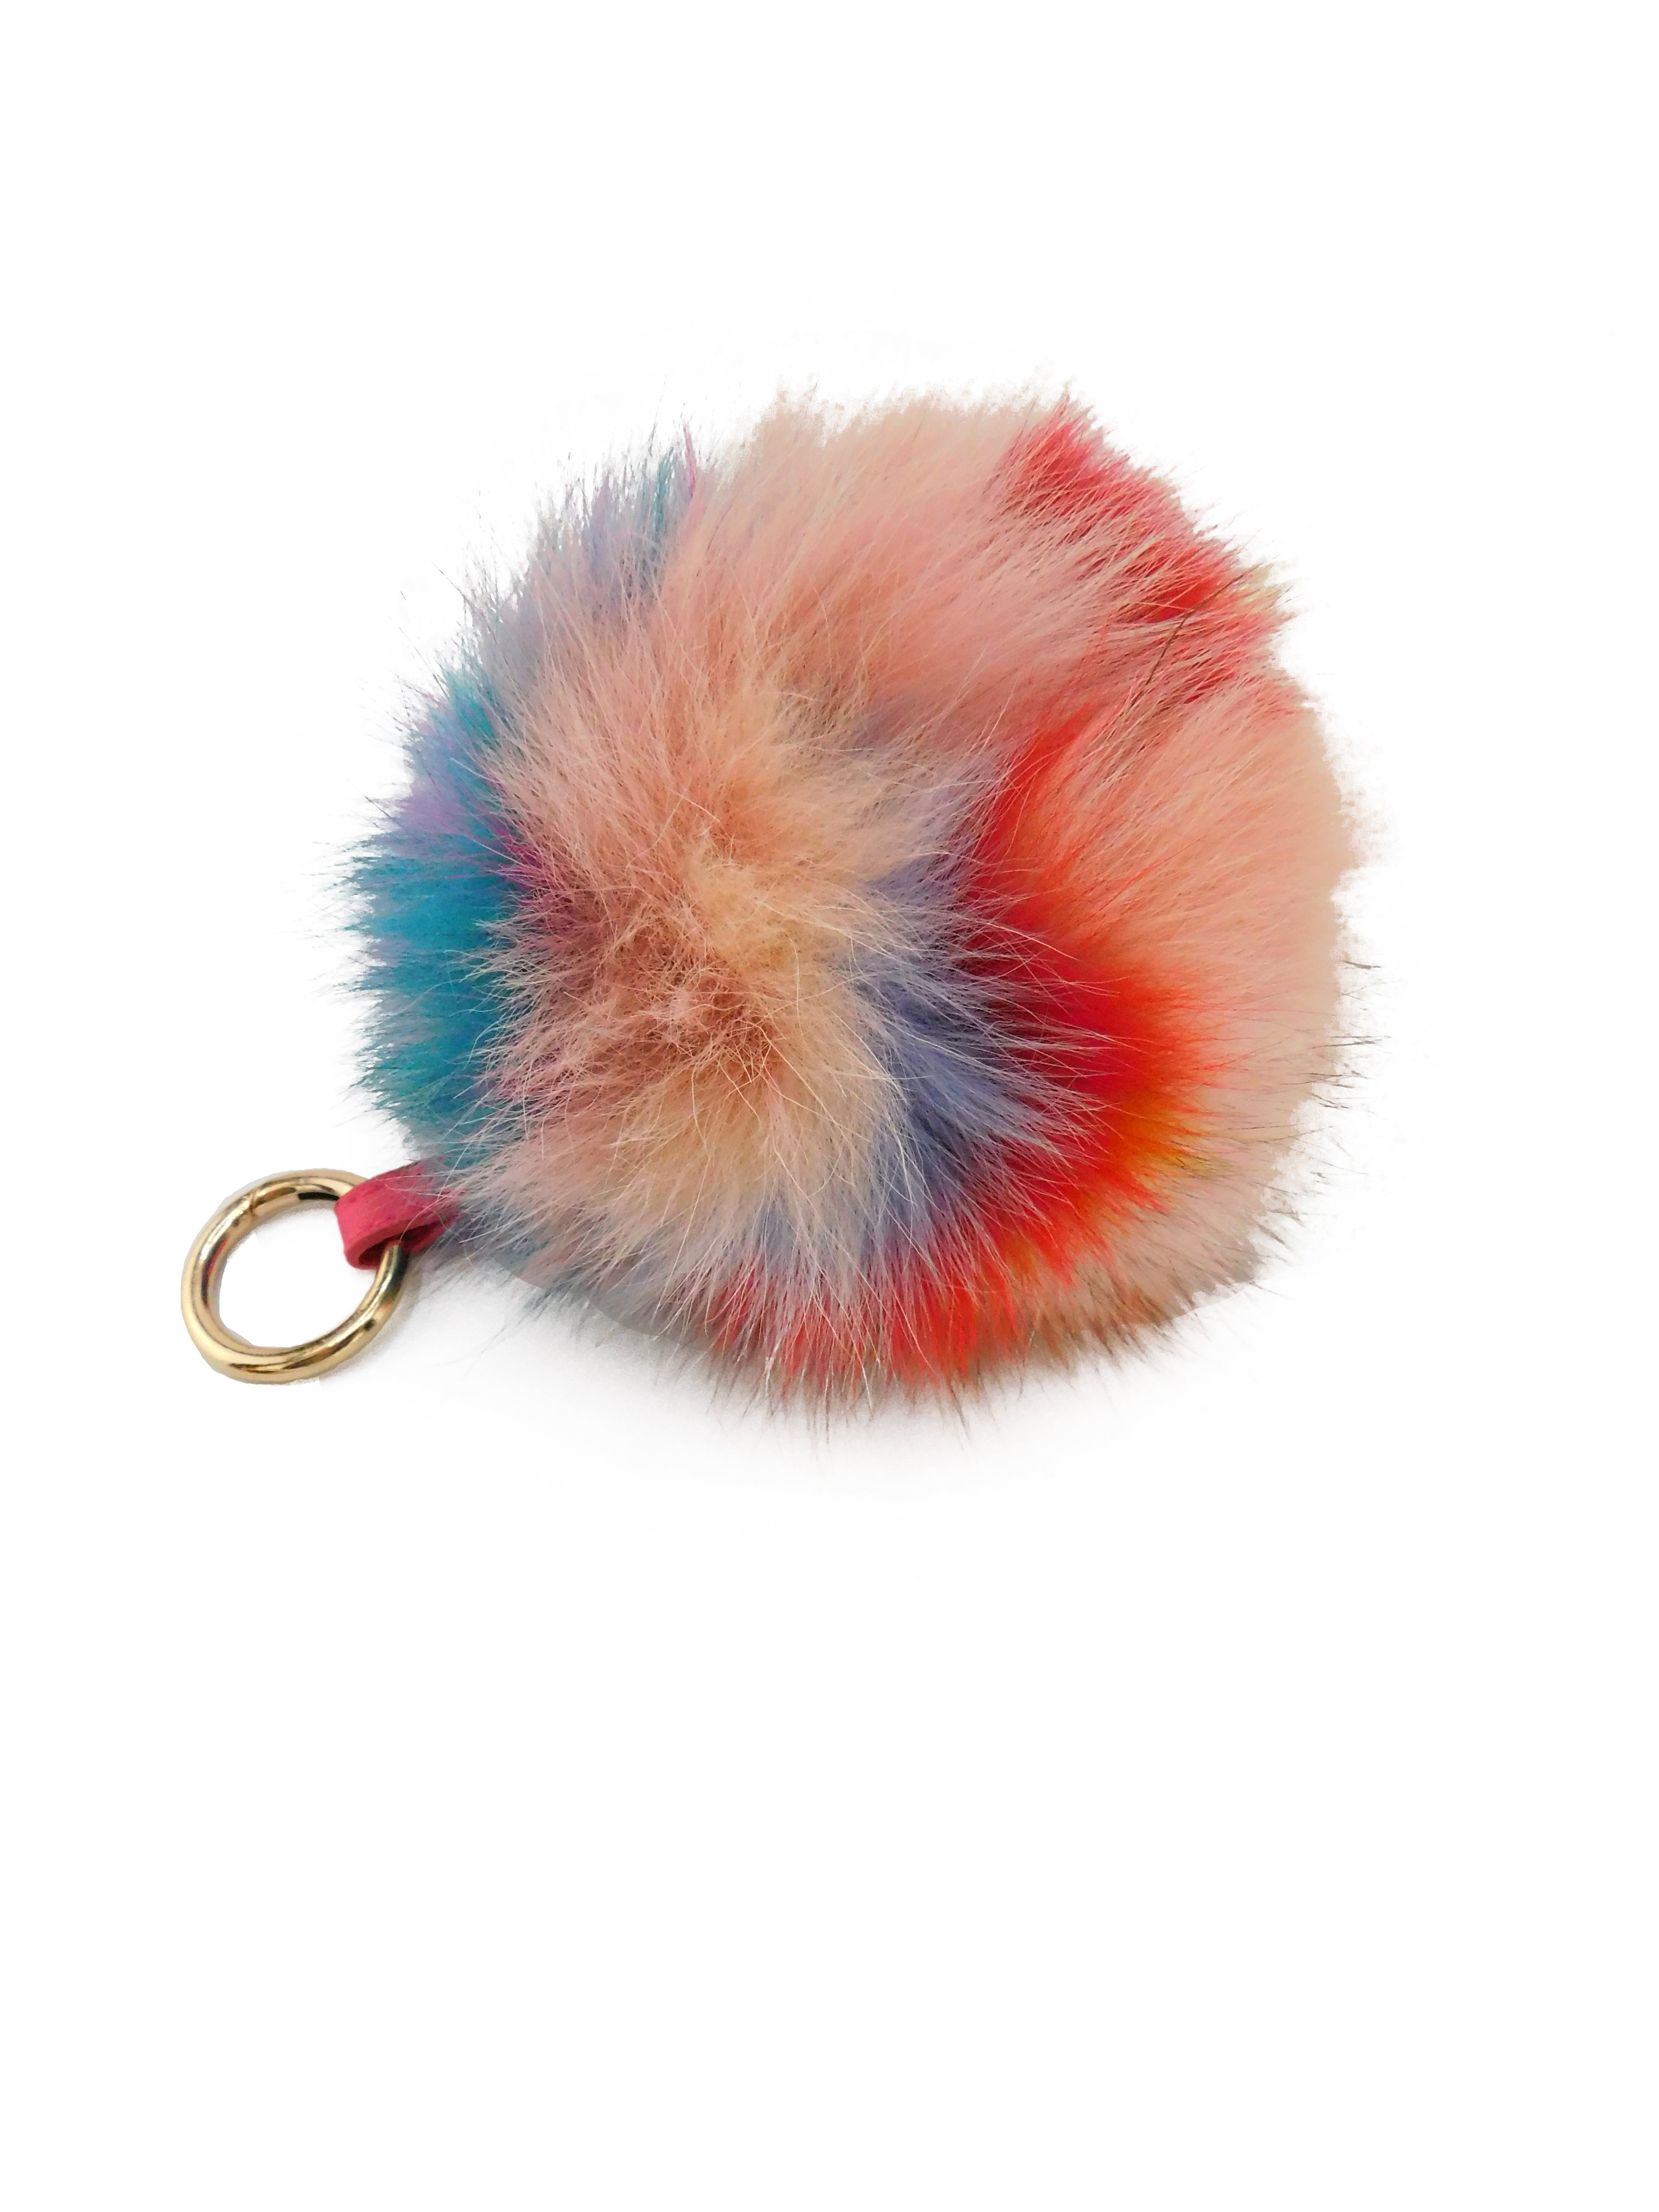 Pom Pom Puff Furry Keychains Tie Dye Colors (12PC) #KNV1286/UKC6596C -   : Beauty Supply, Fashion, and Jewelry Wholesale Distributor